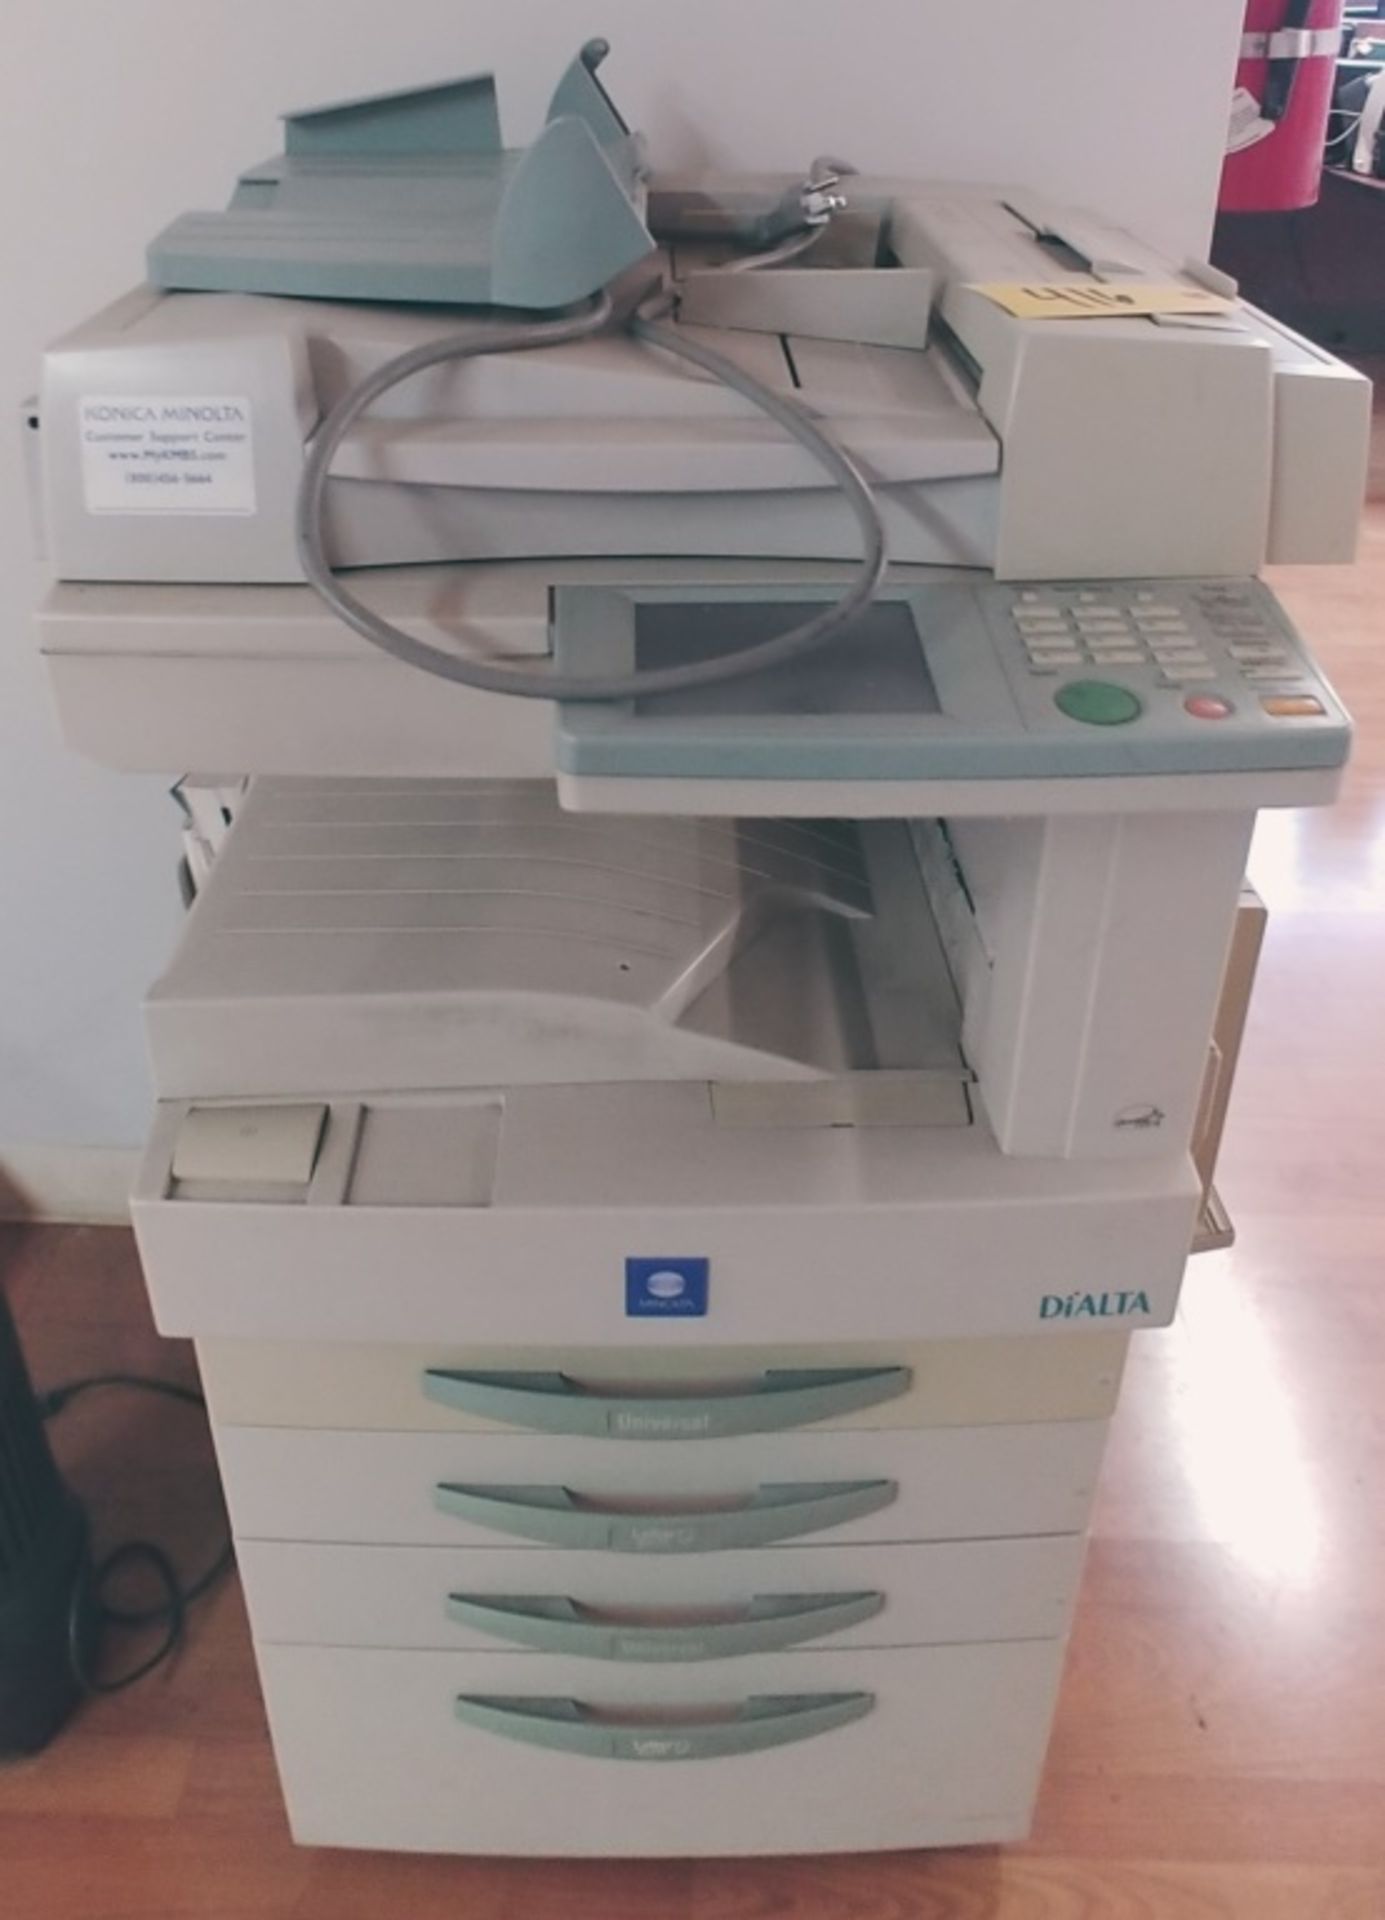 Dialta Workstation Printer Copier